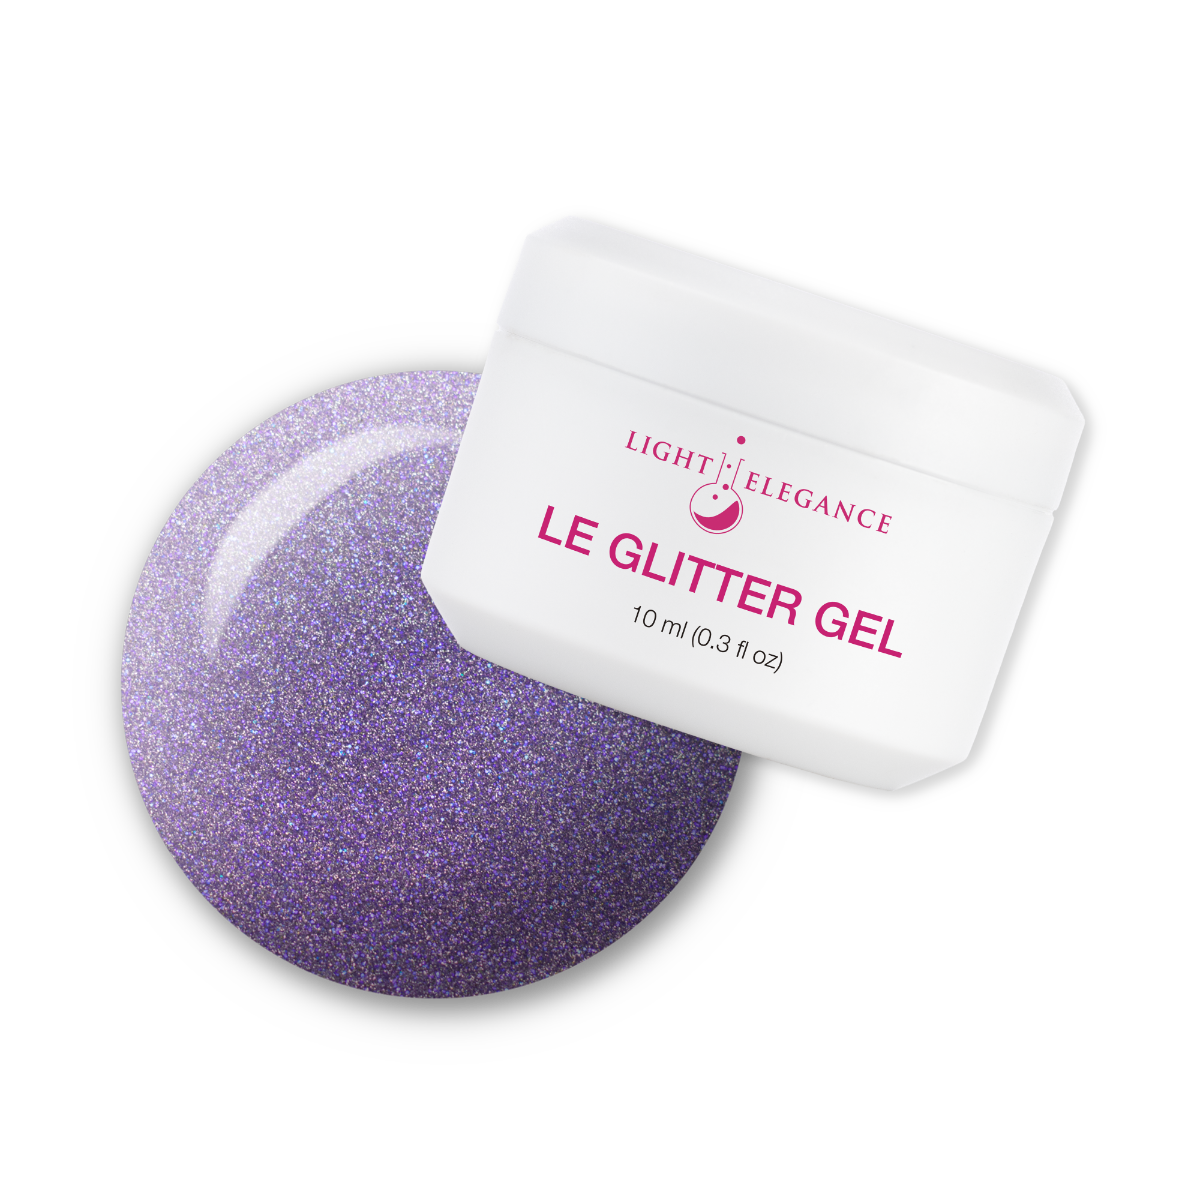 Light Elegance Glitter Gel - Supernova :: New Packaging - Creata Beauty - Professional Beauty Products